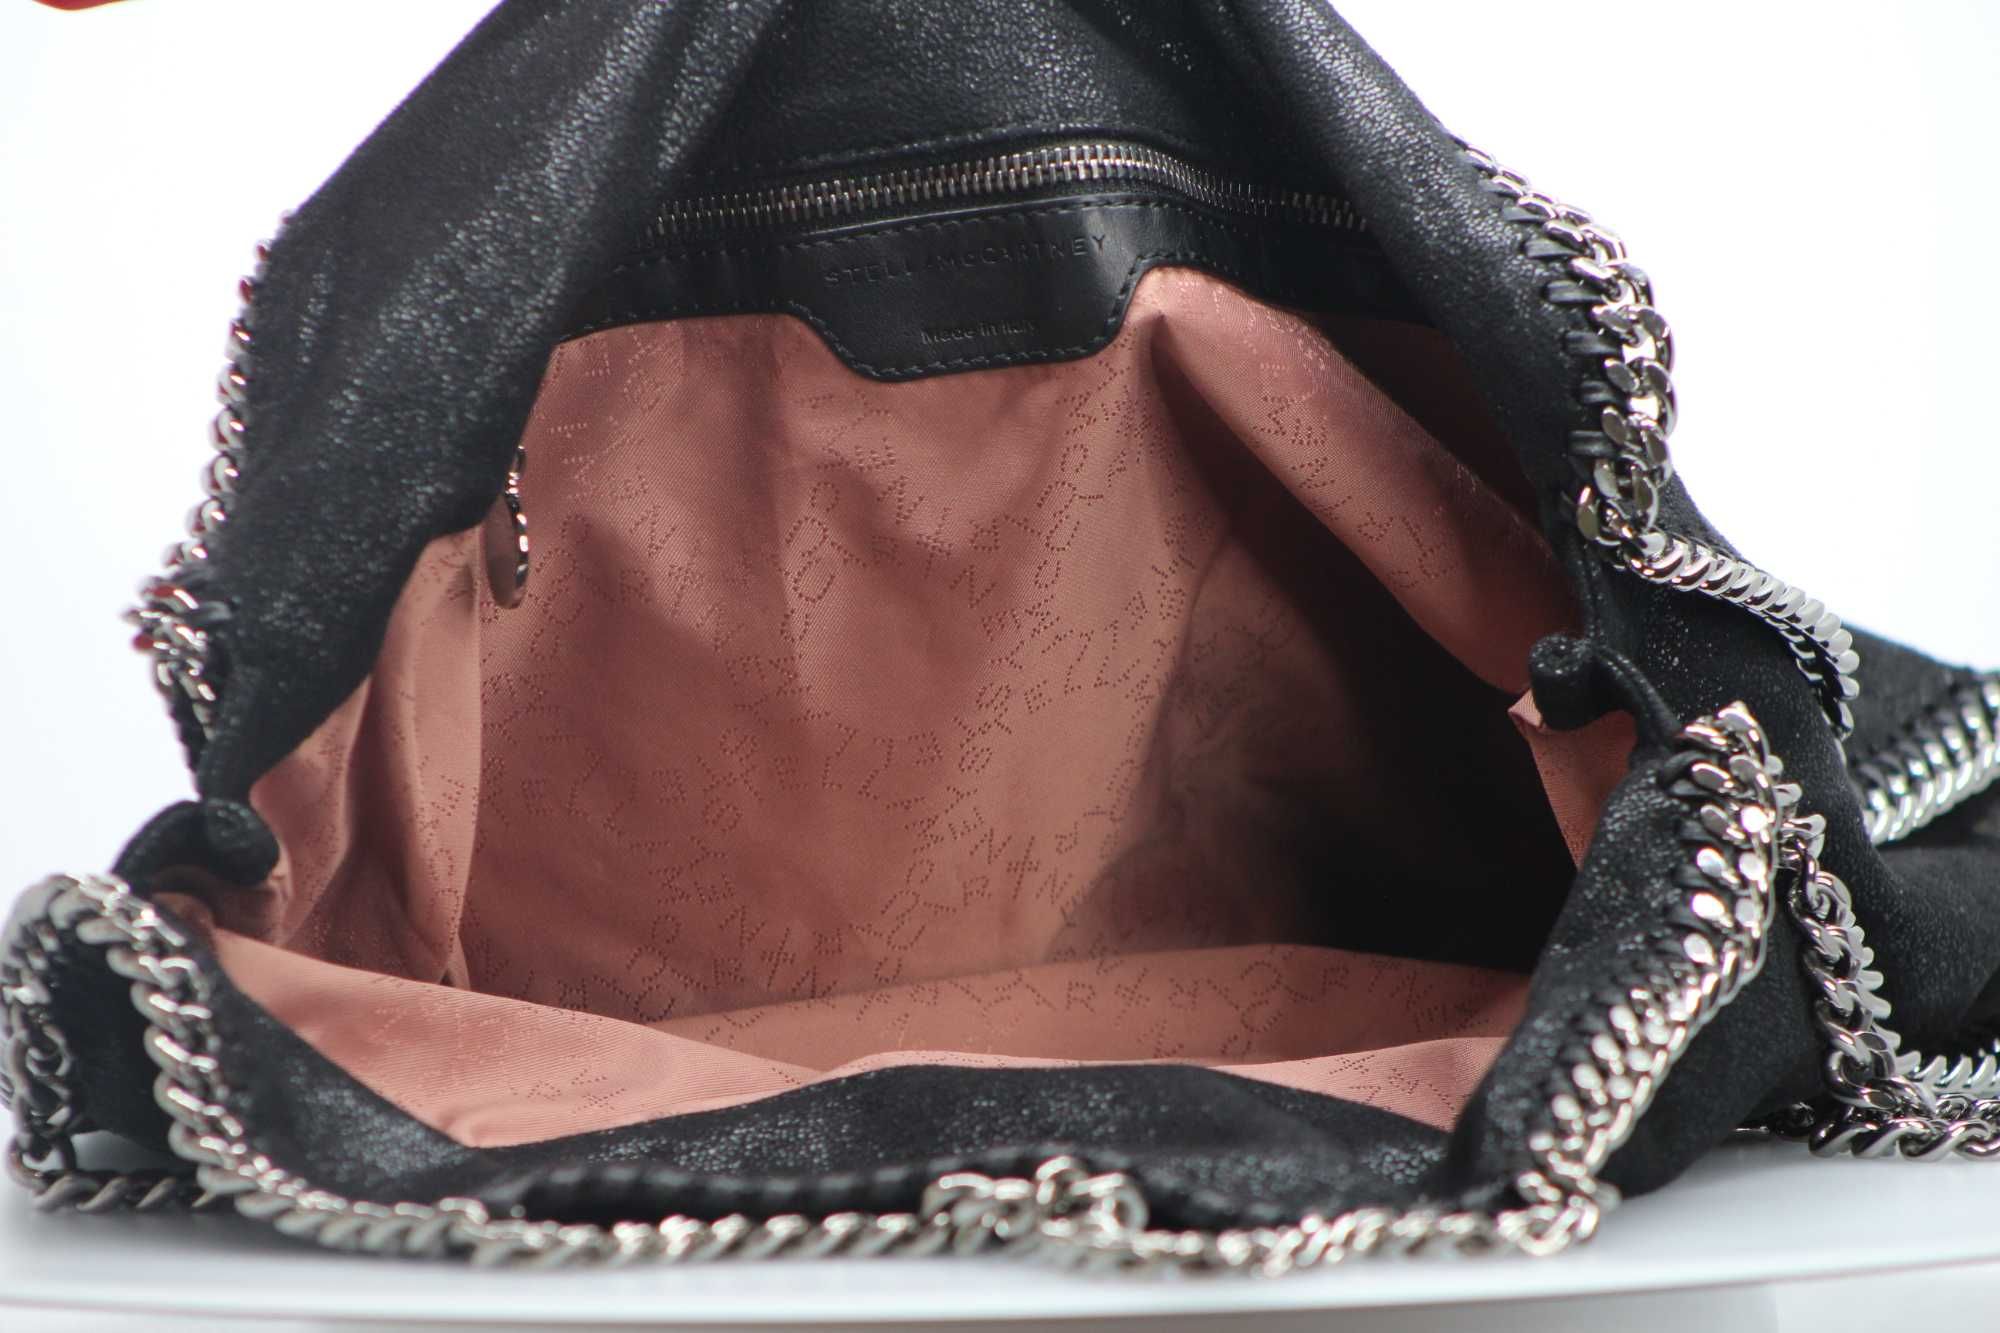 Stella Mc Cartney Bag Falabella black